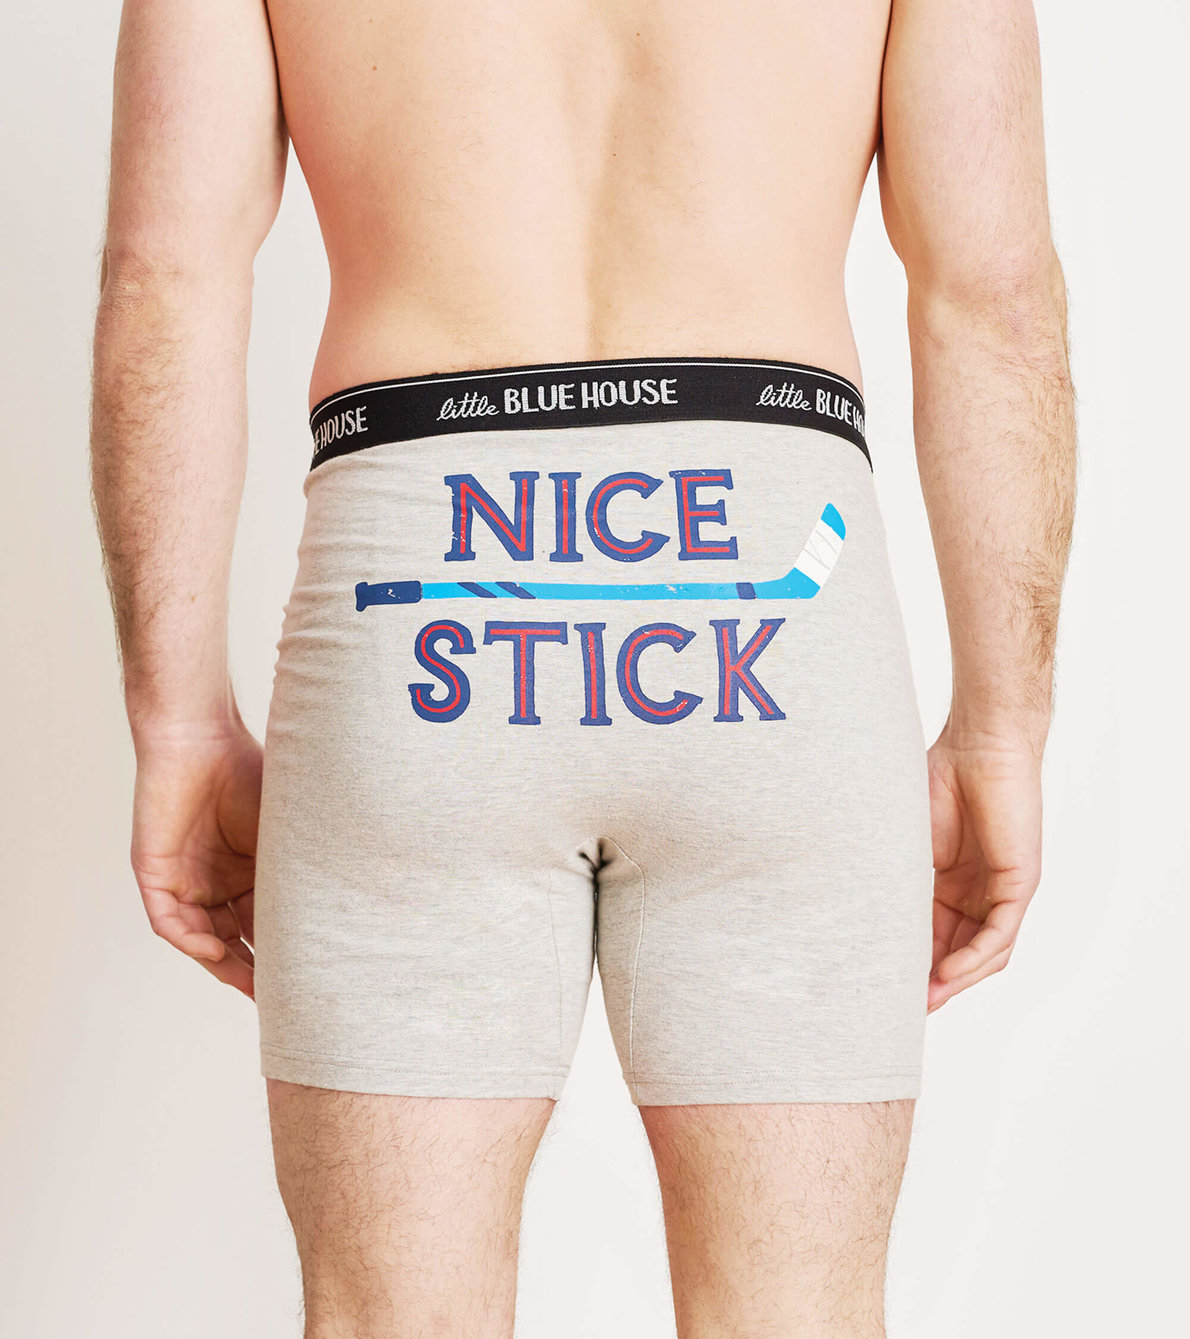 View larger image of Nice Stick Men's Boxer Briefs